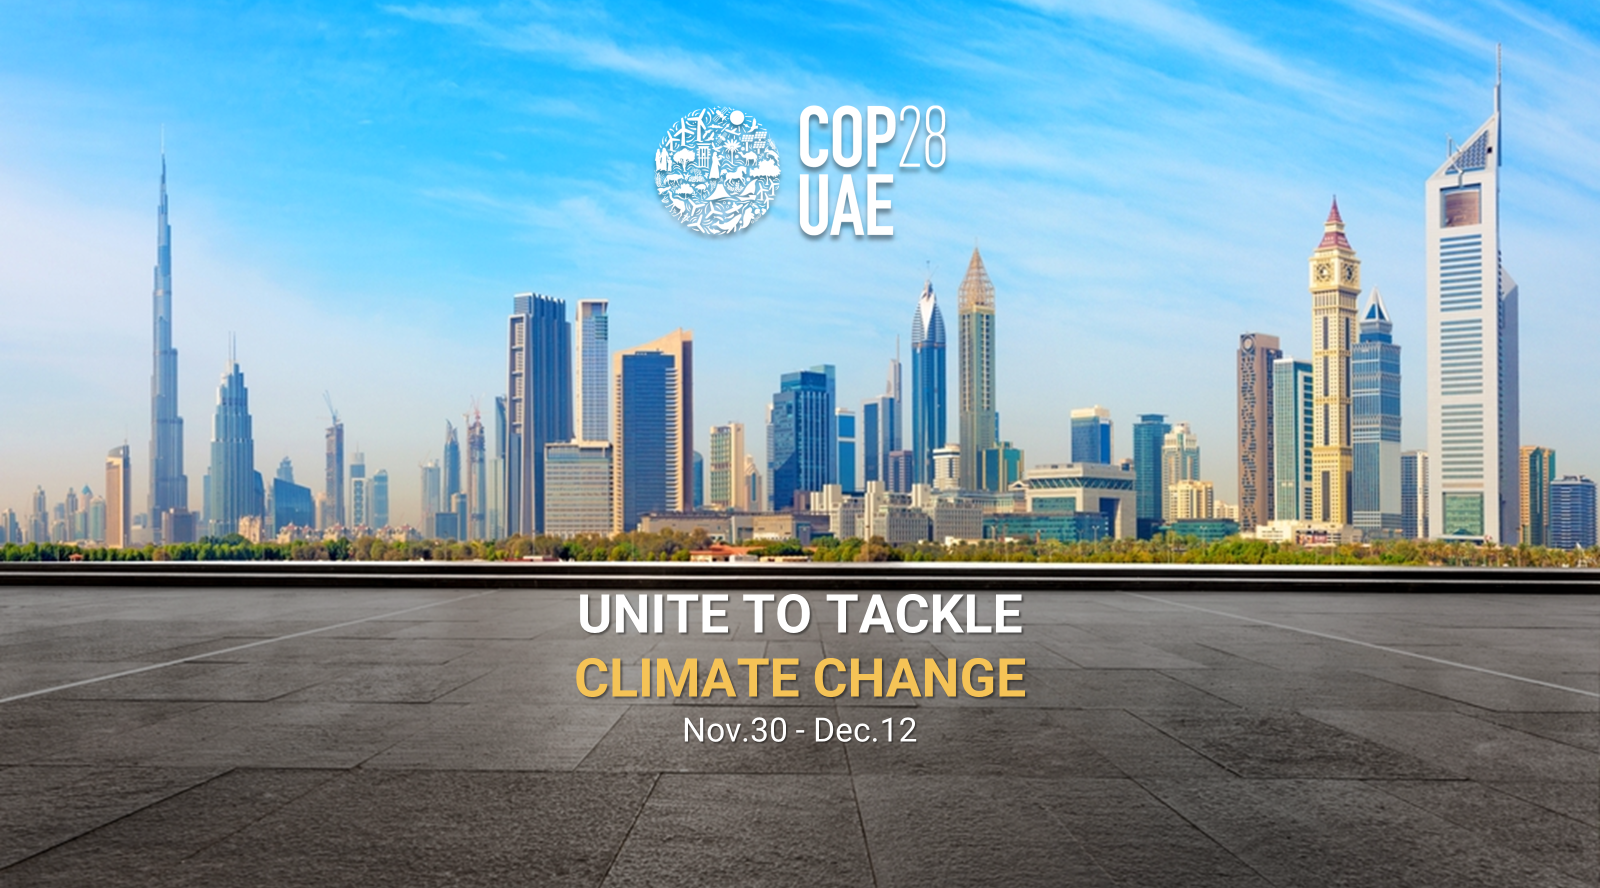 Tzu Chi to Attend COP28 UAE